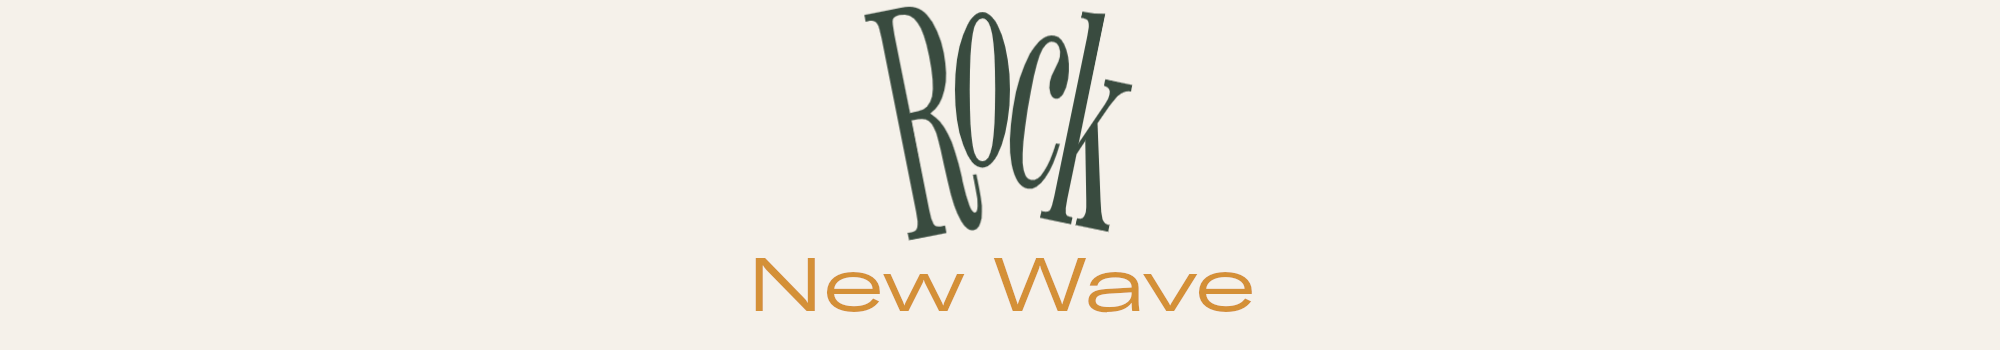 Rubrik till kategori: Rock - New Wave